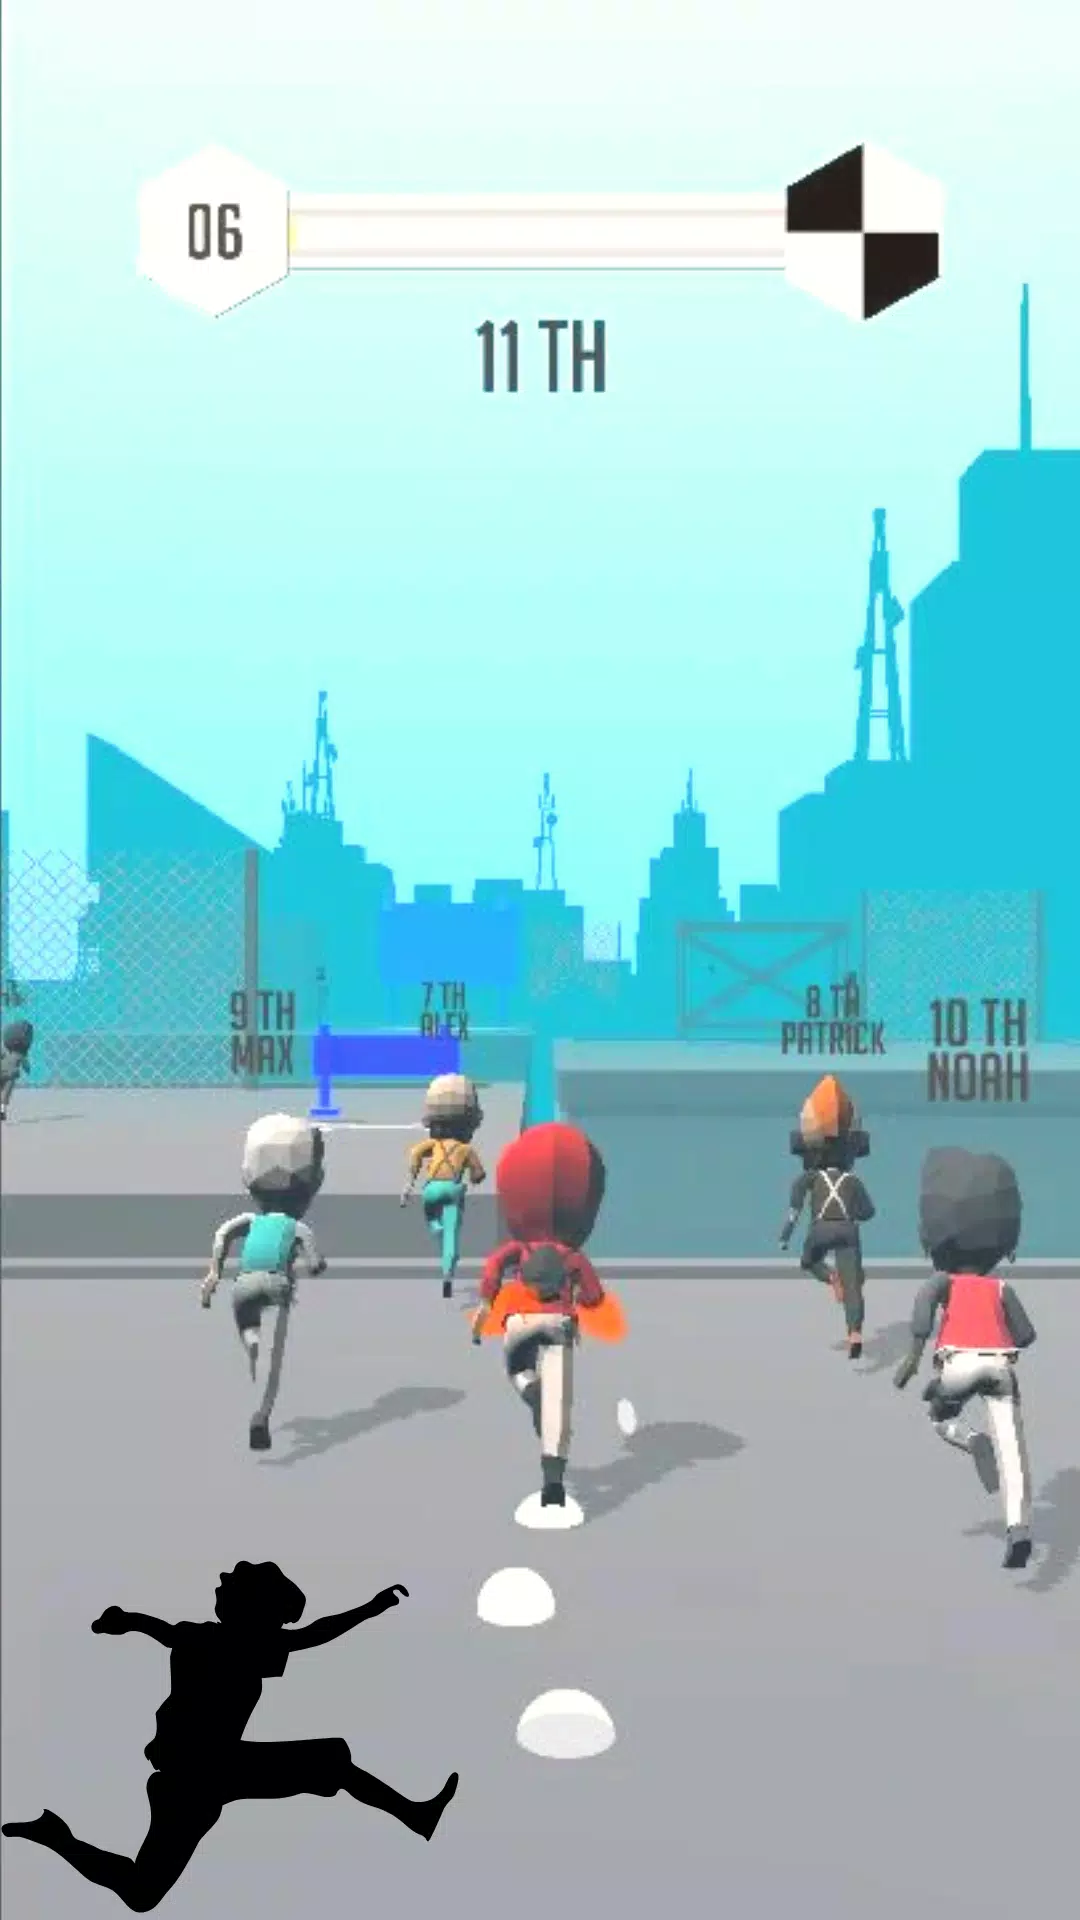 Parkour Race - Freerun Game - Download do APK para Android